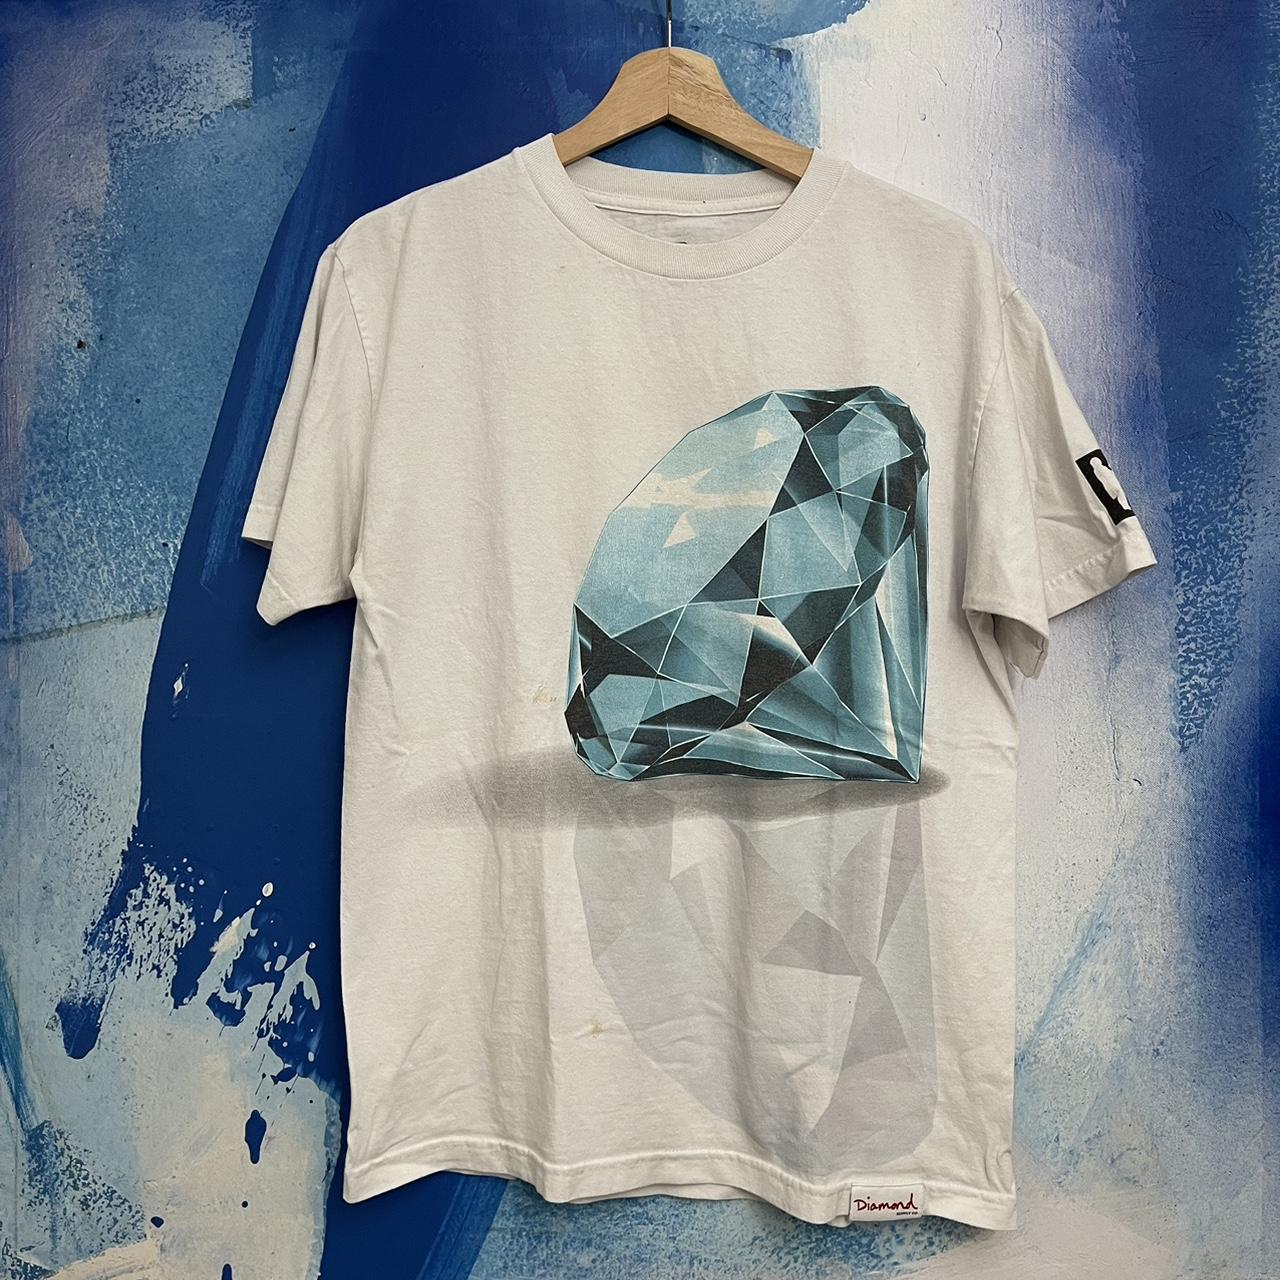 Diamond Supply Co. Men's White and Blue T-shirt